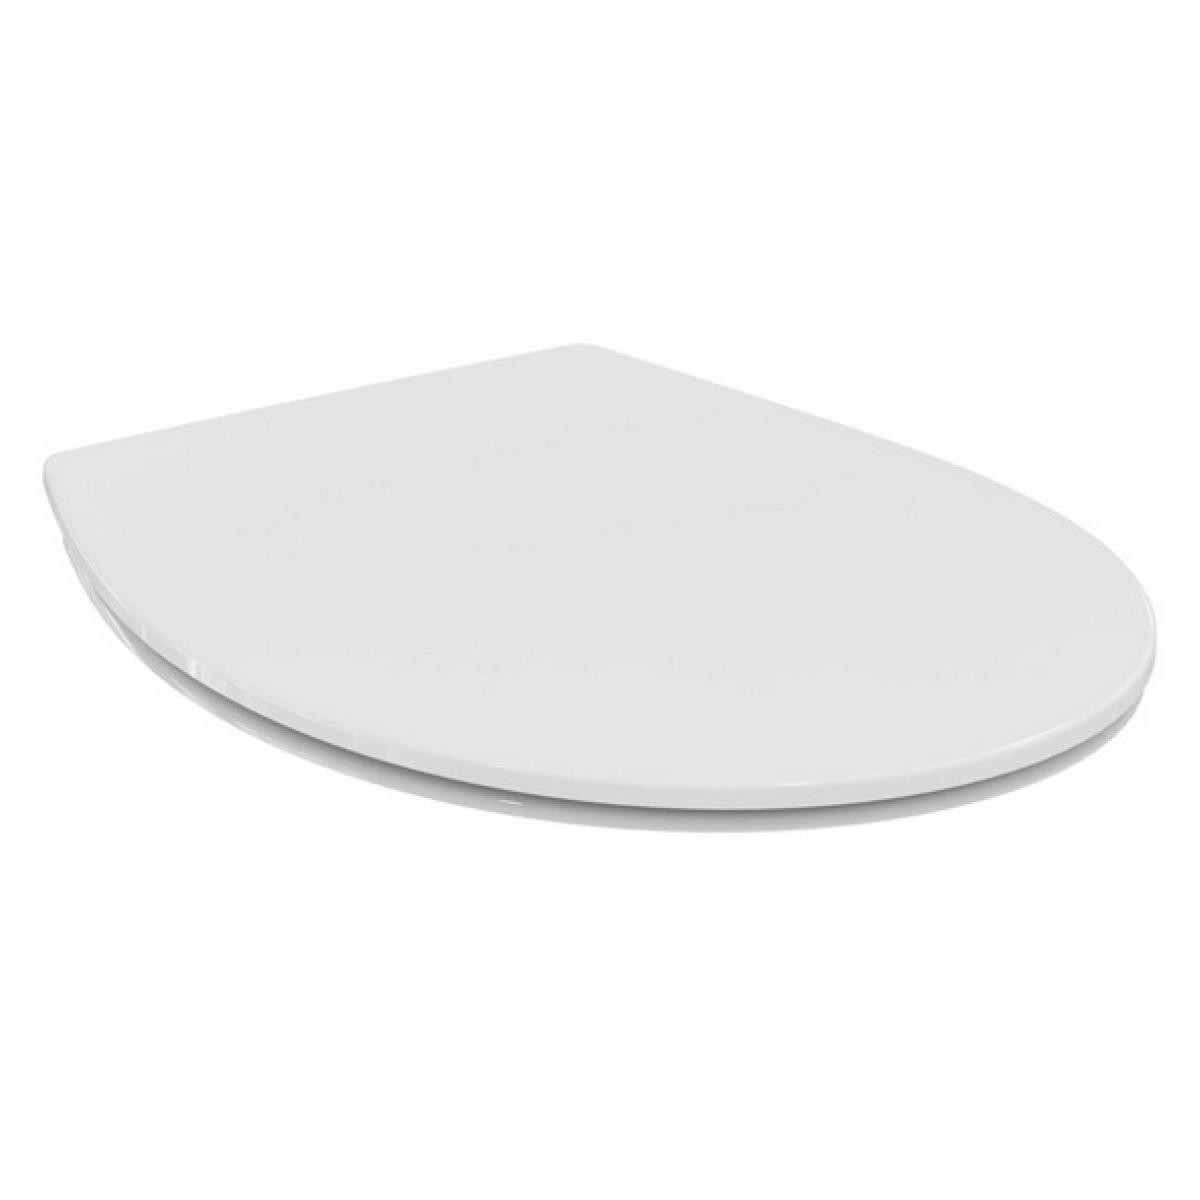 Ideal Standard - Ideal Standard - Abattant recouvrant ultra-fin urea blanc charnières inox - Abattant WC